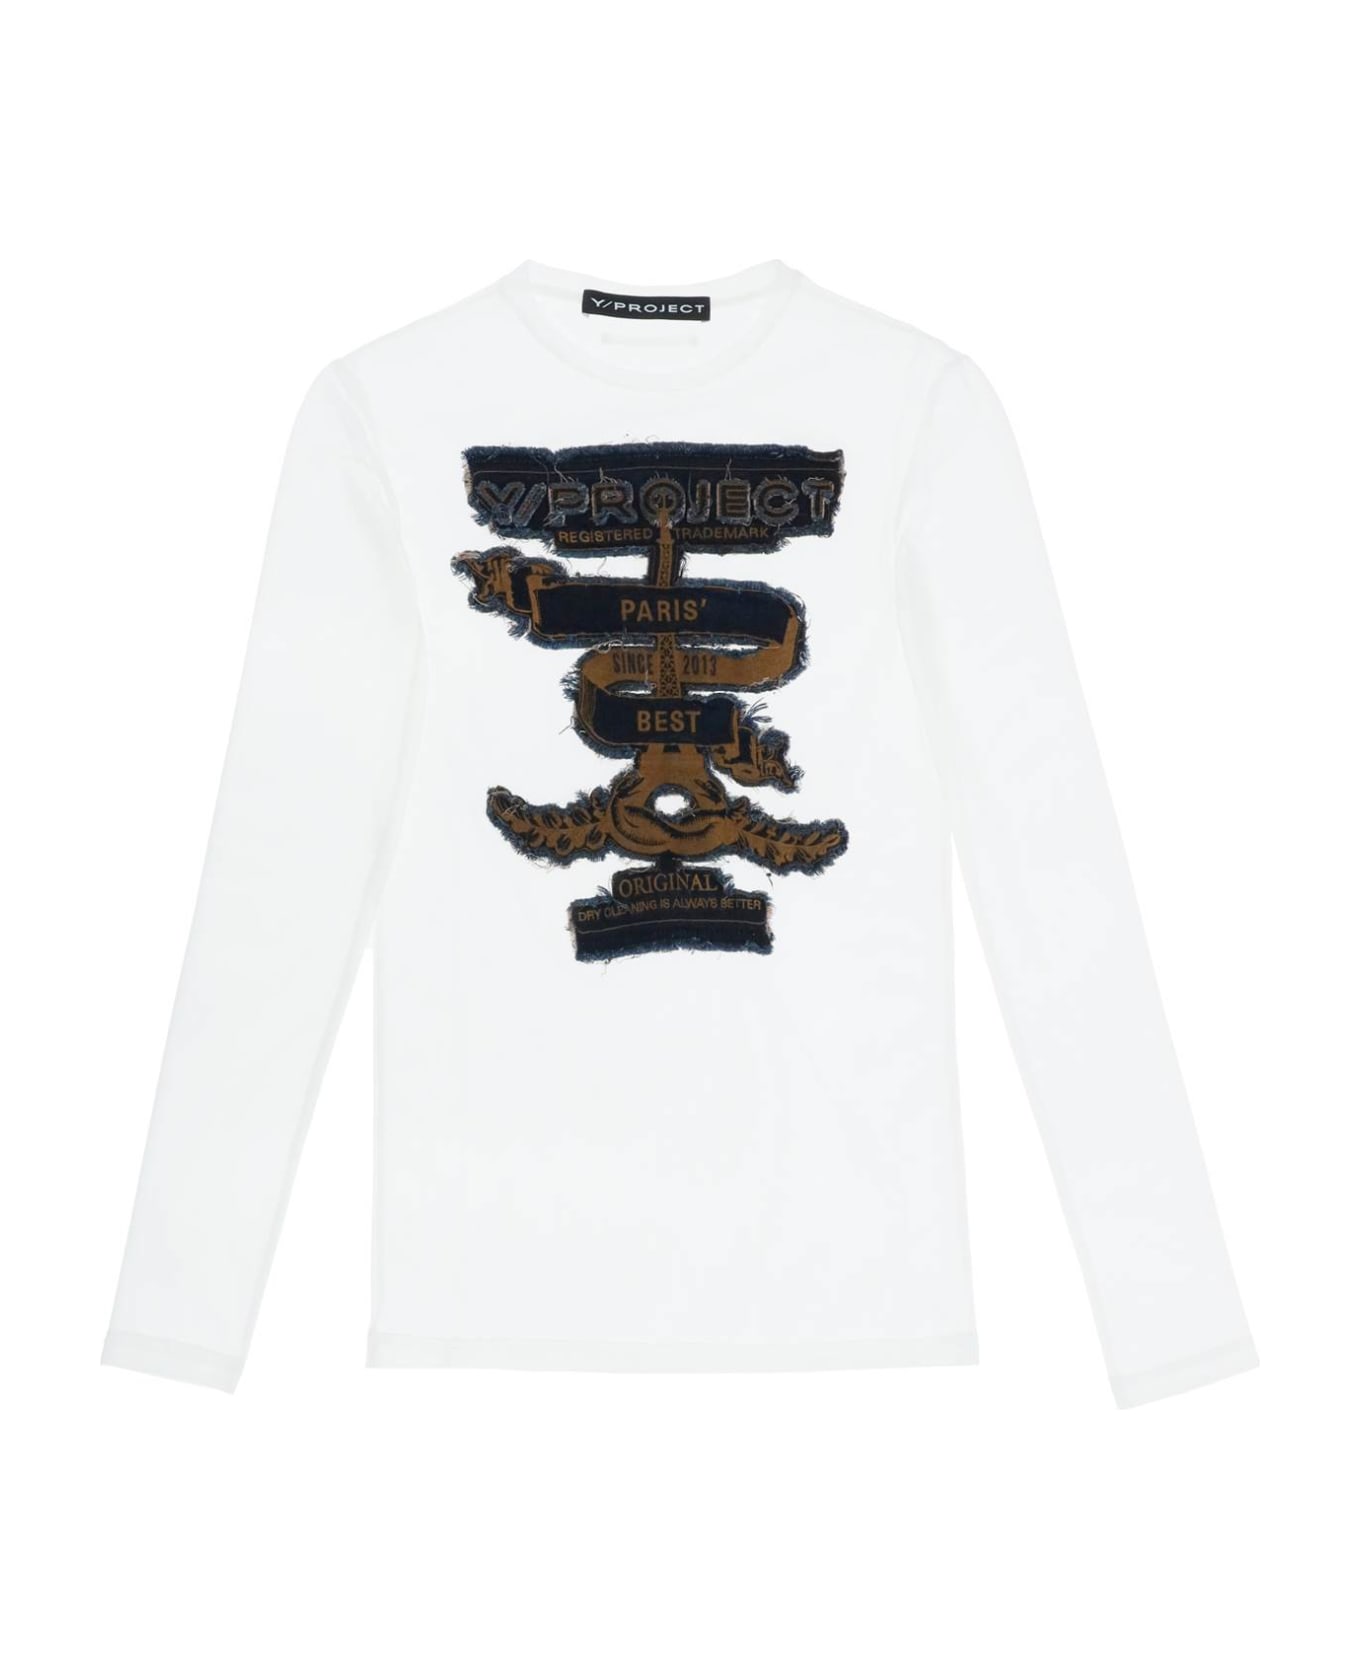 Y/Project Paris' Best Long Sleeve Mesh T-shirt - WHITE (White)